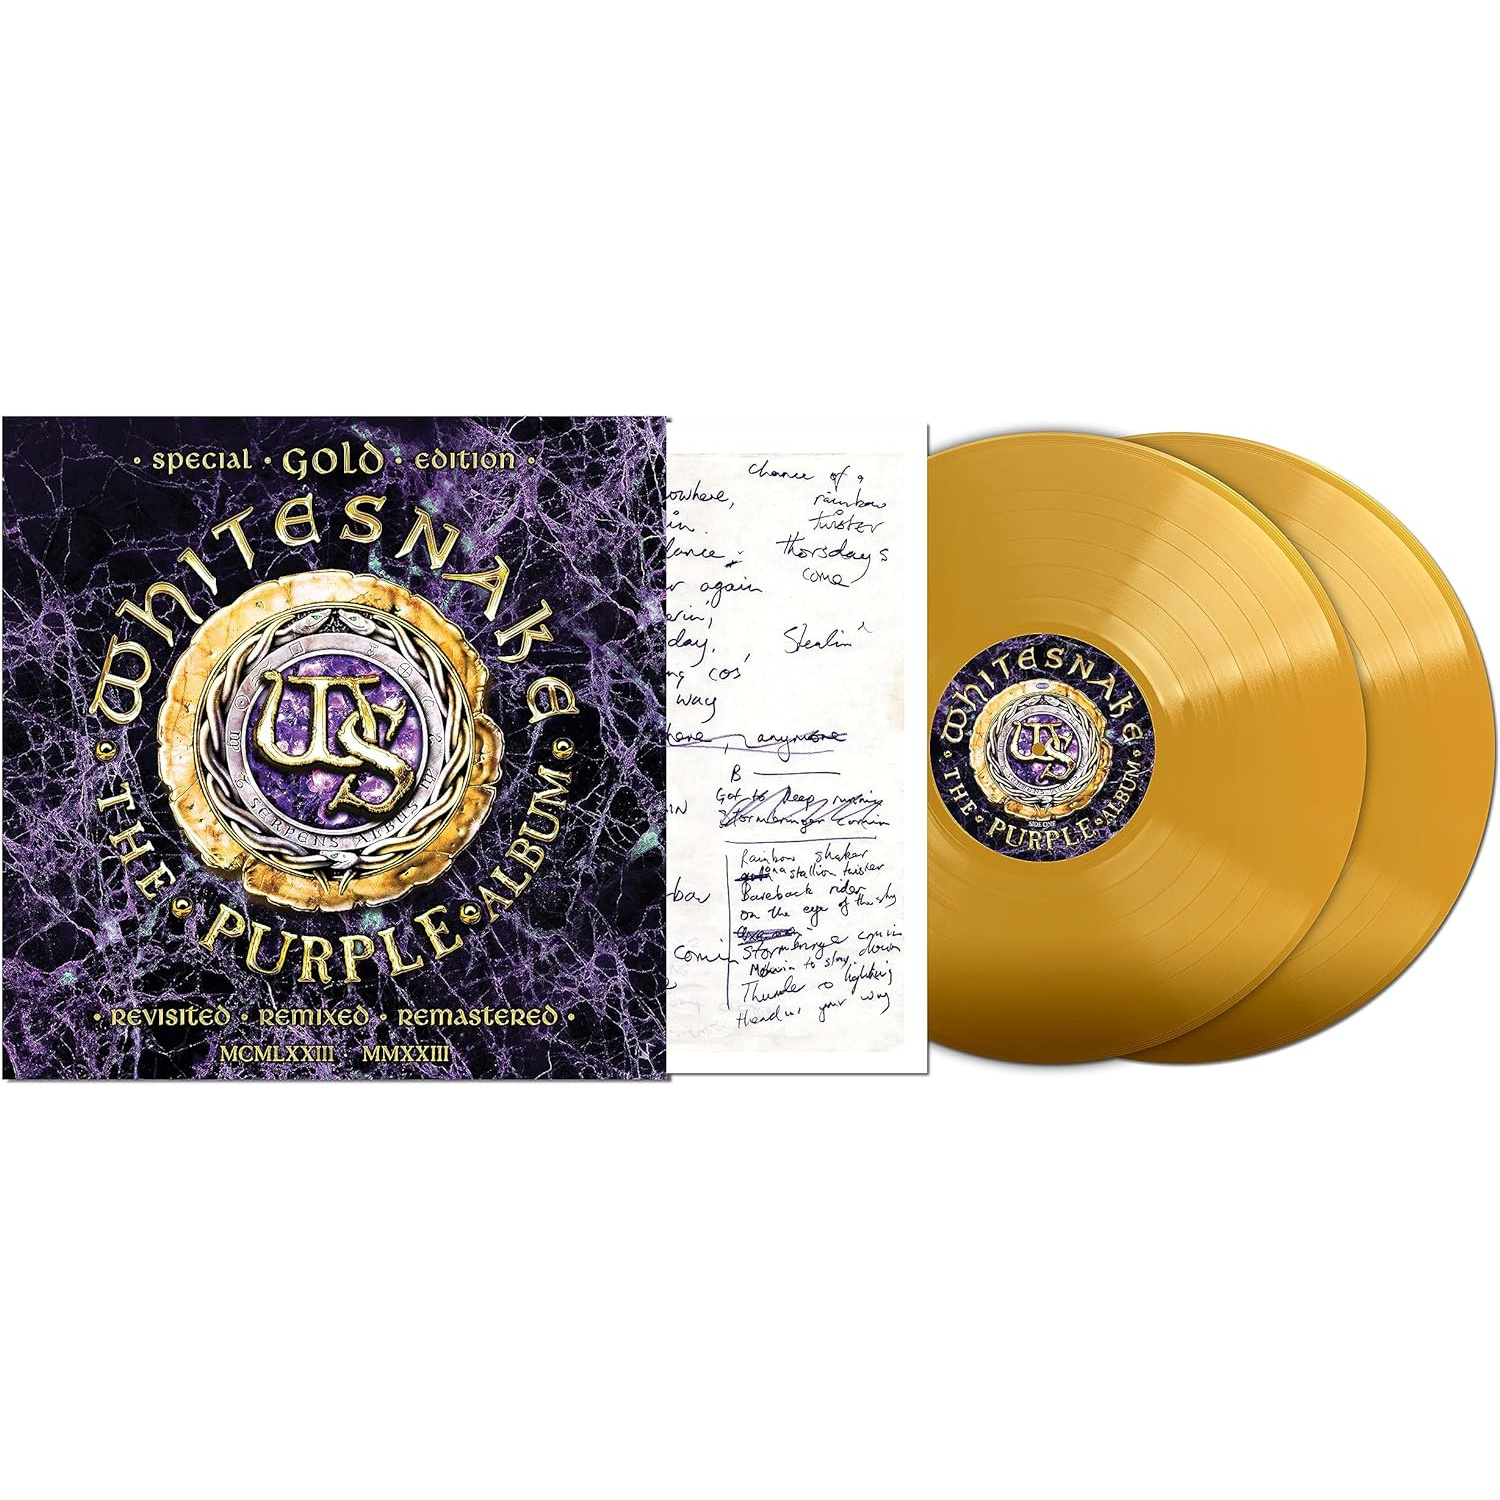 THE PURPLE ALBUM: SPECIAL GOLD - GOLD VINYL EDITION